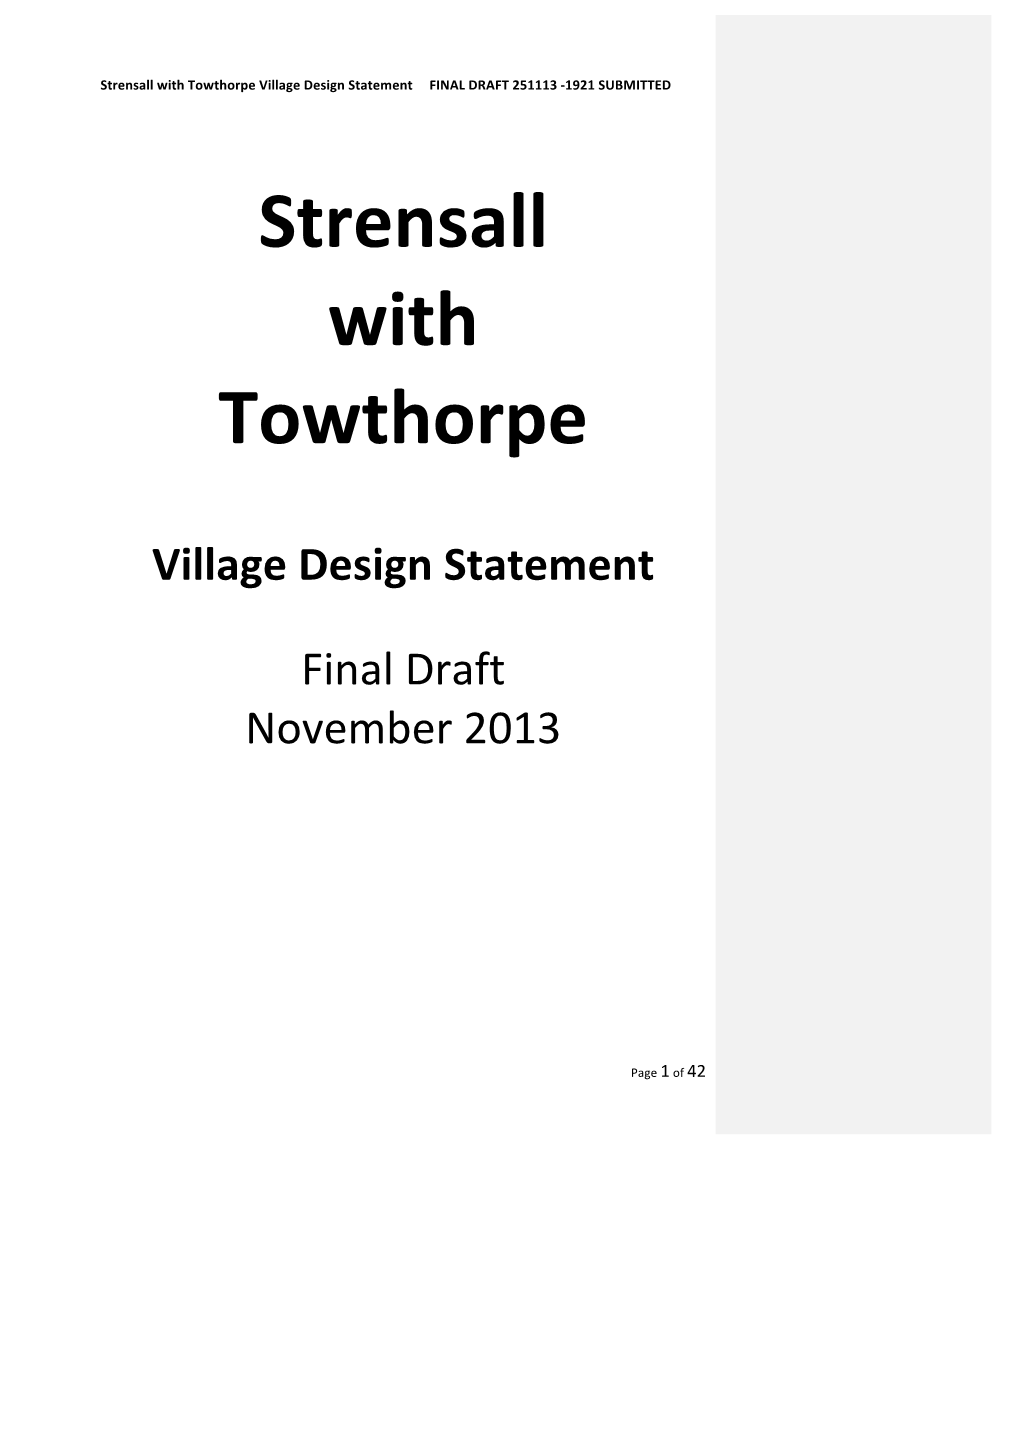 Village Design Statement FINAL DRAFT 251113 -1921 SUBMITTED